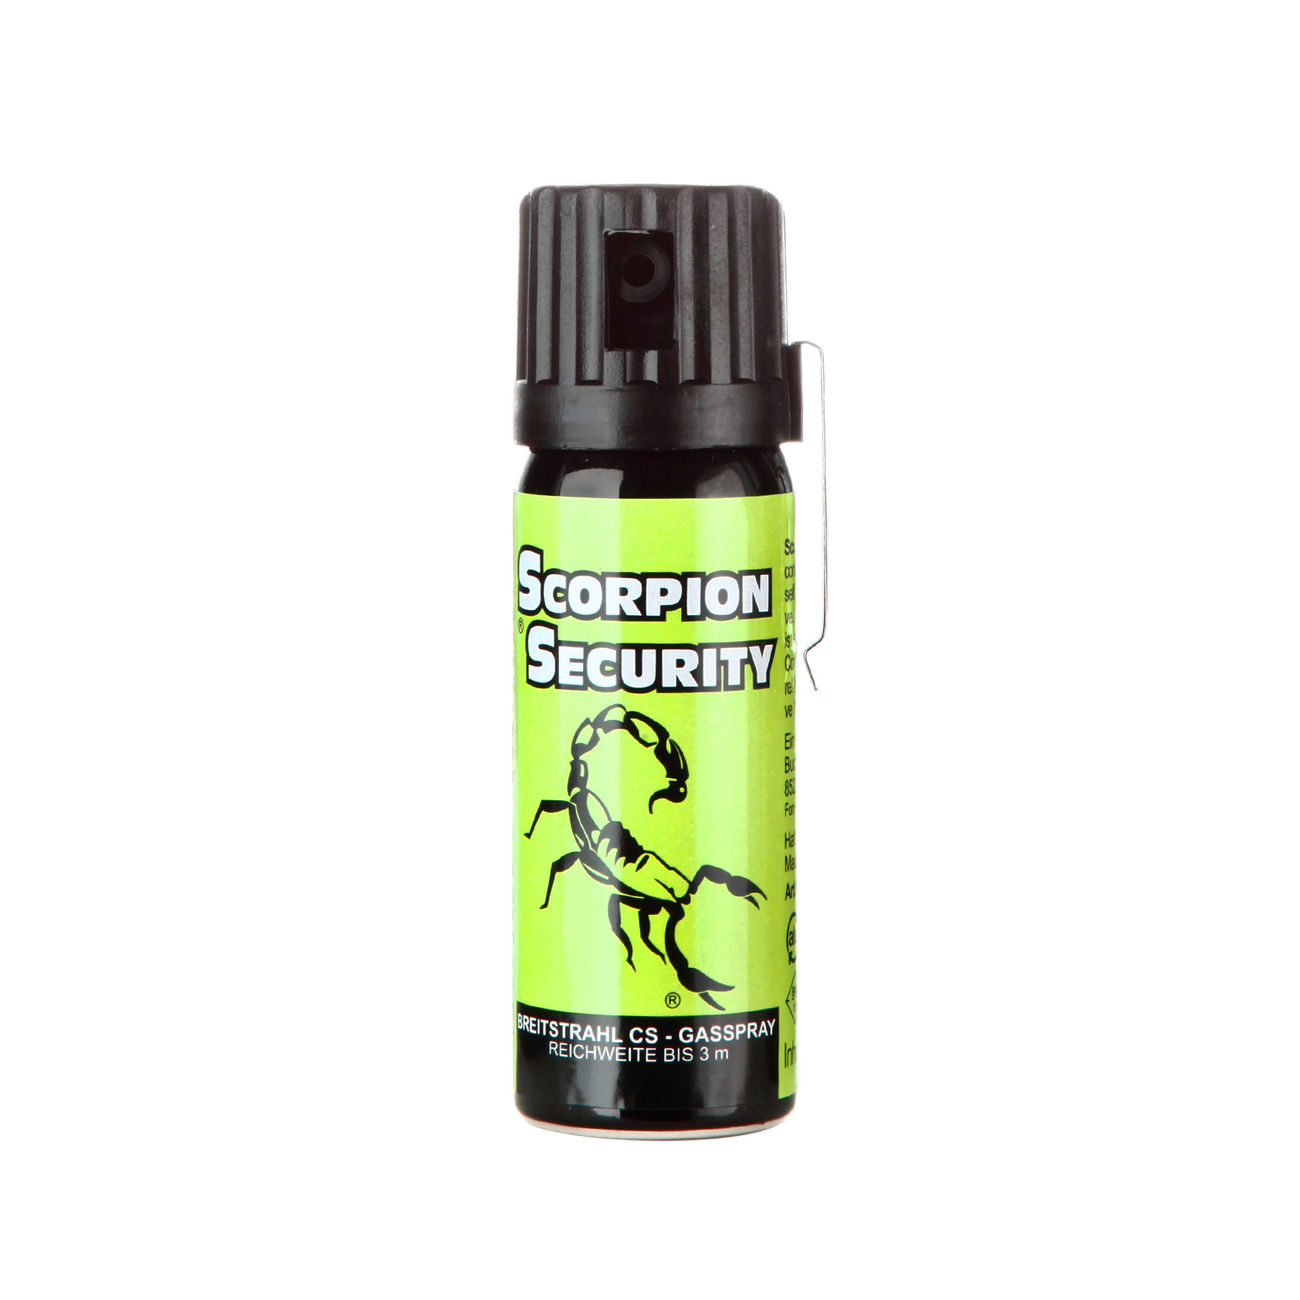 Scorpion CS Gasspray Breitstrahl 50ml